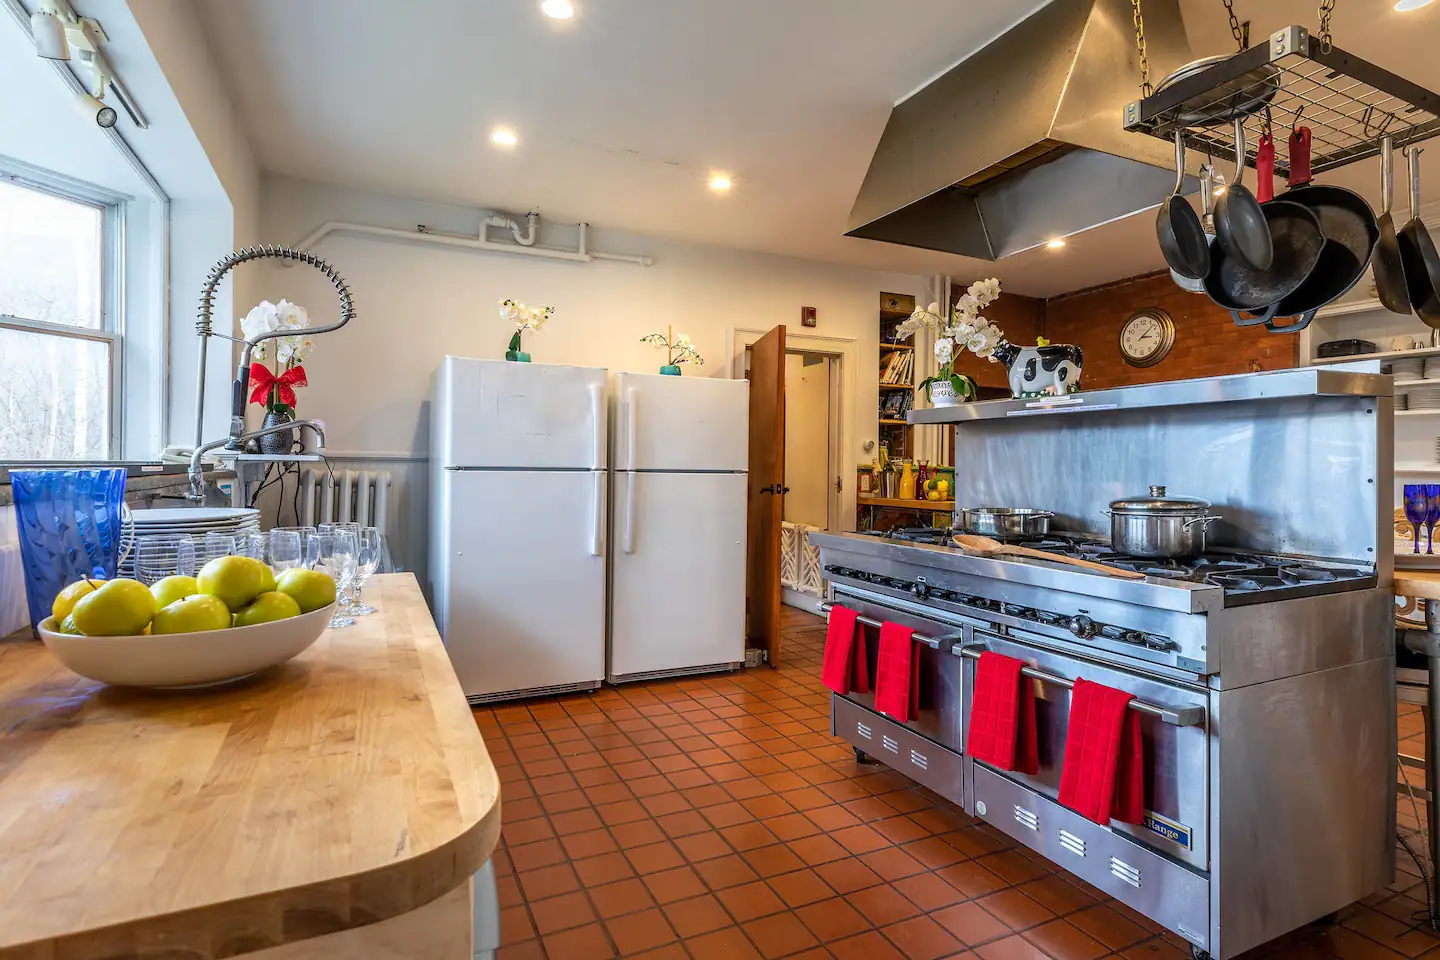 Oven fridge in the kitchen Mansion in Battenkill Valley